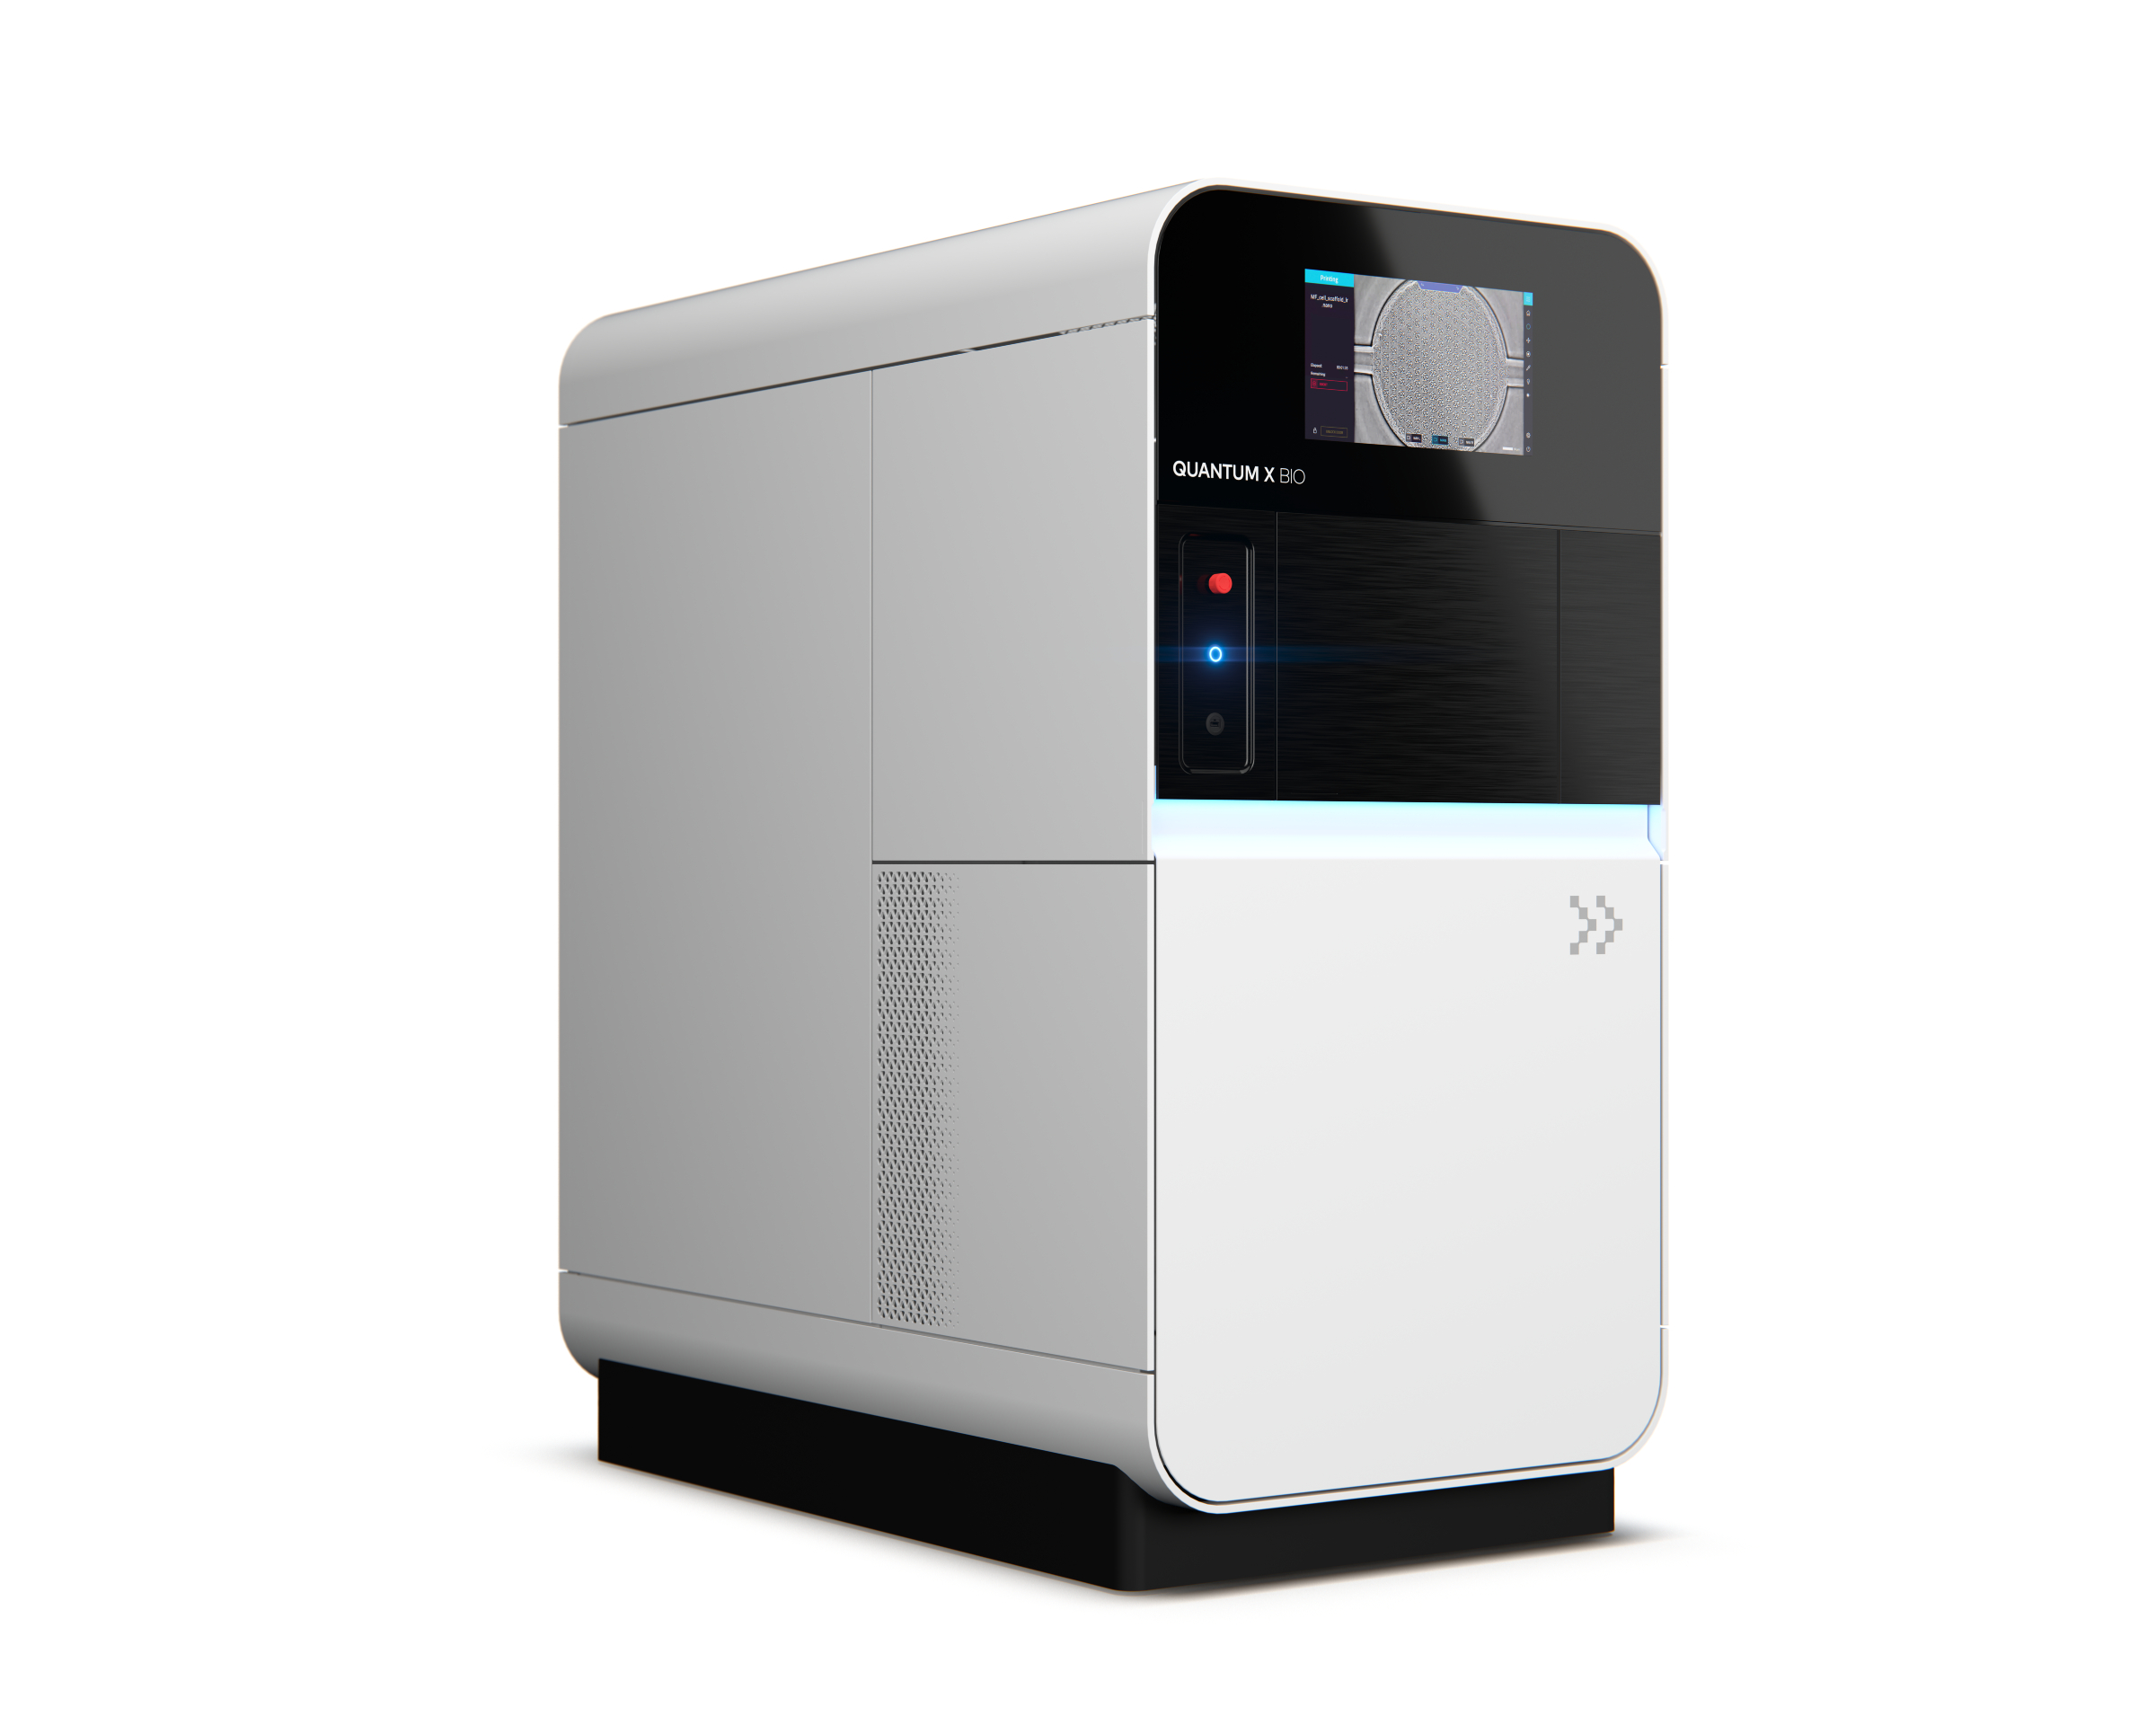 The Quantum X bio 3D printer. Photo via BICO.